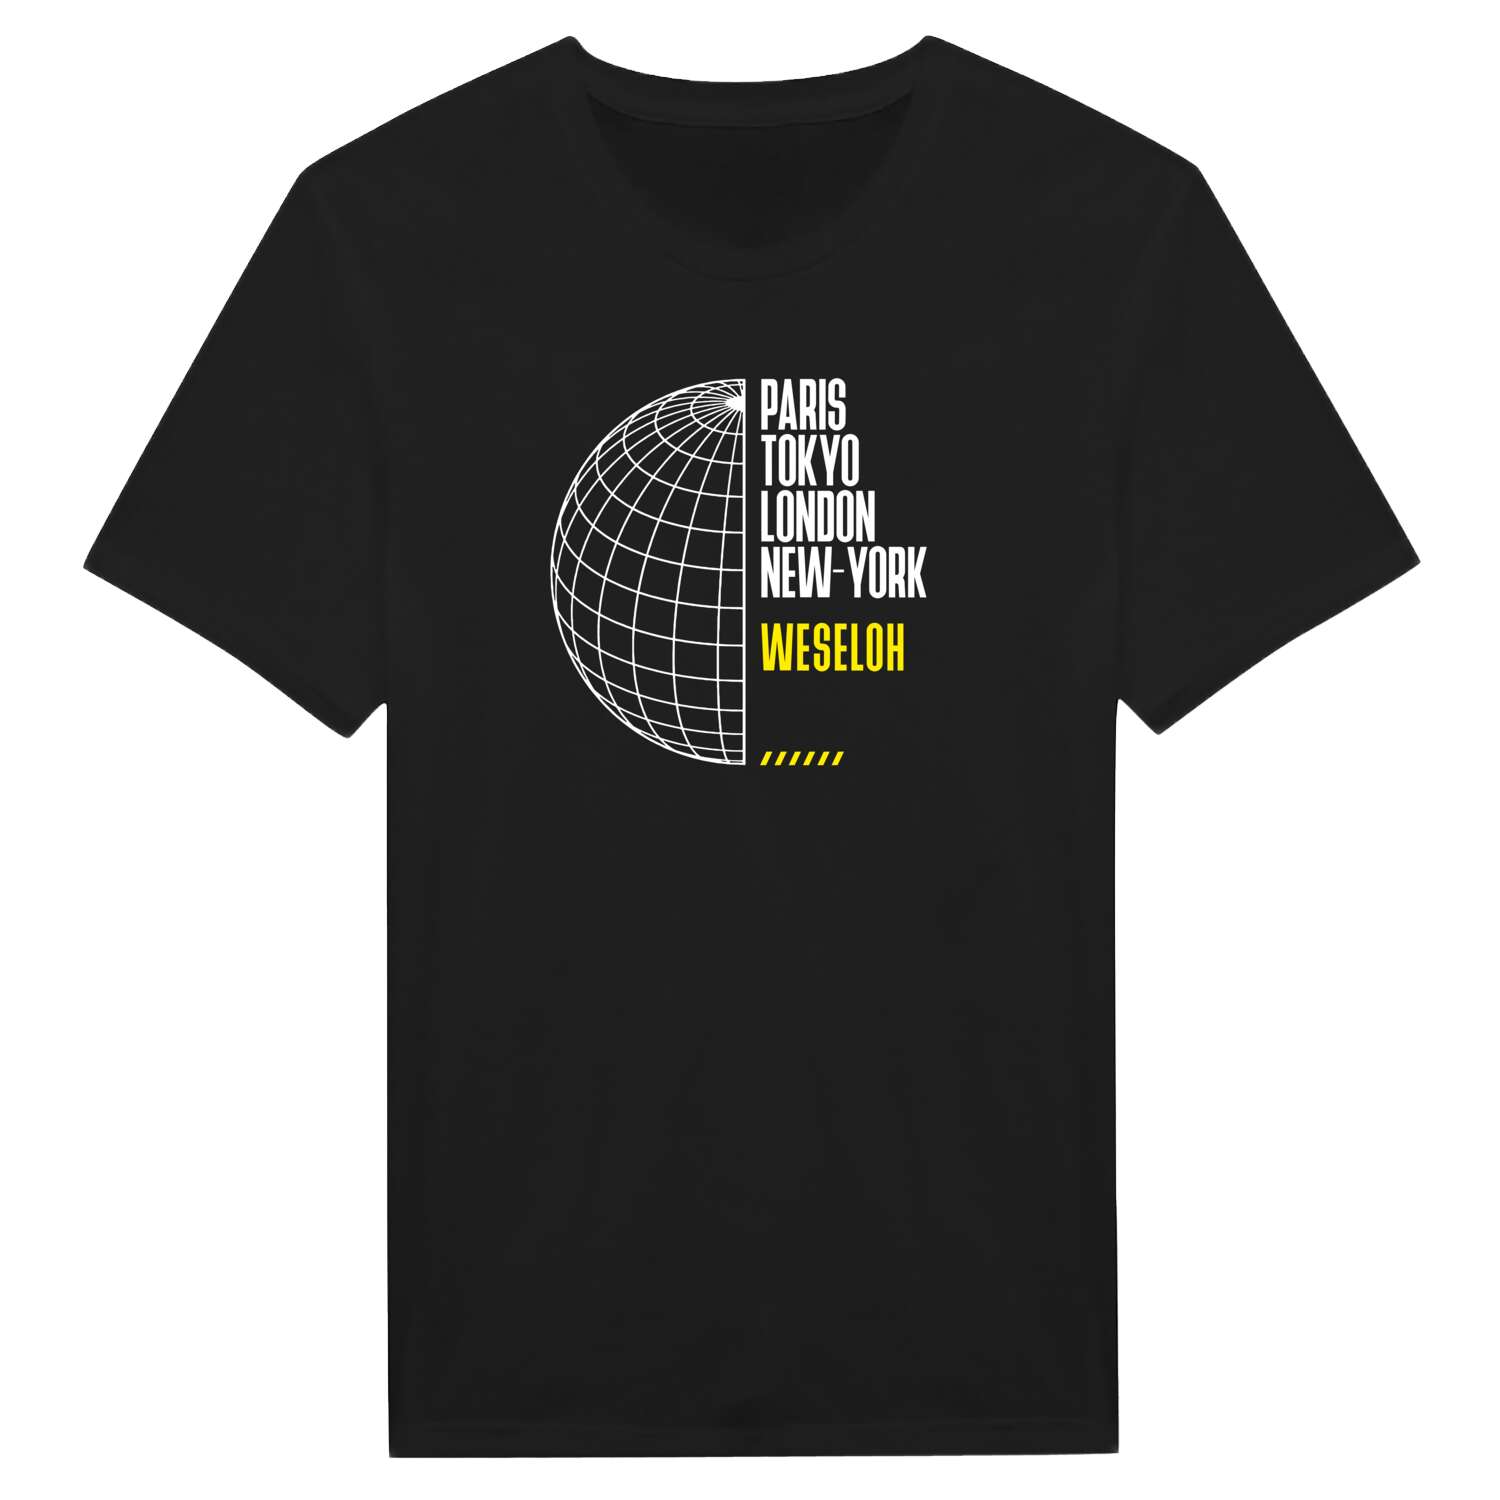 Weseloh T-Shirt »Paris Tokyo London«